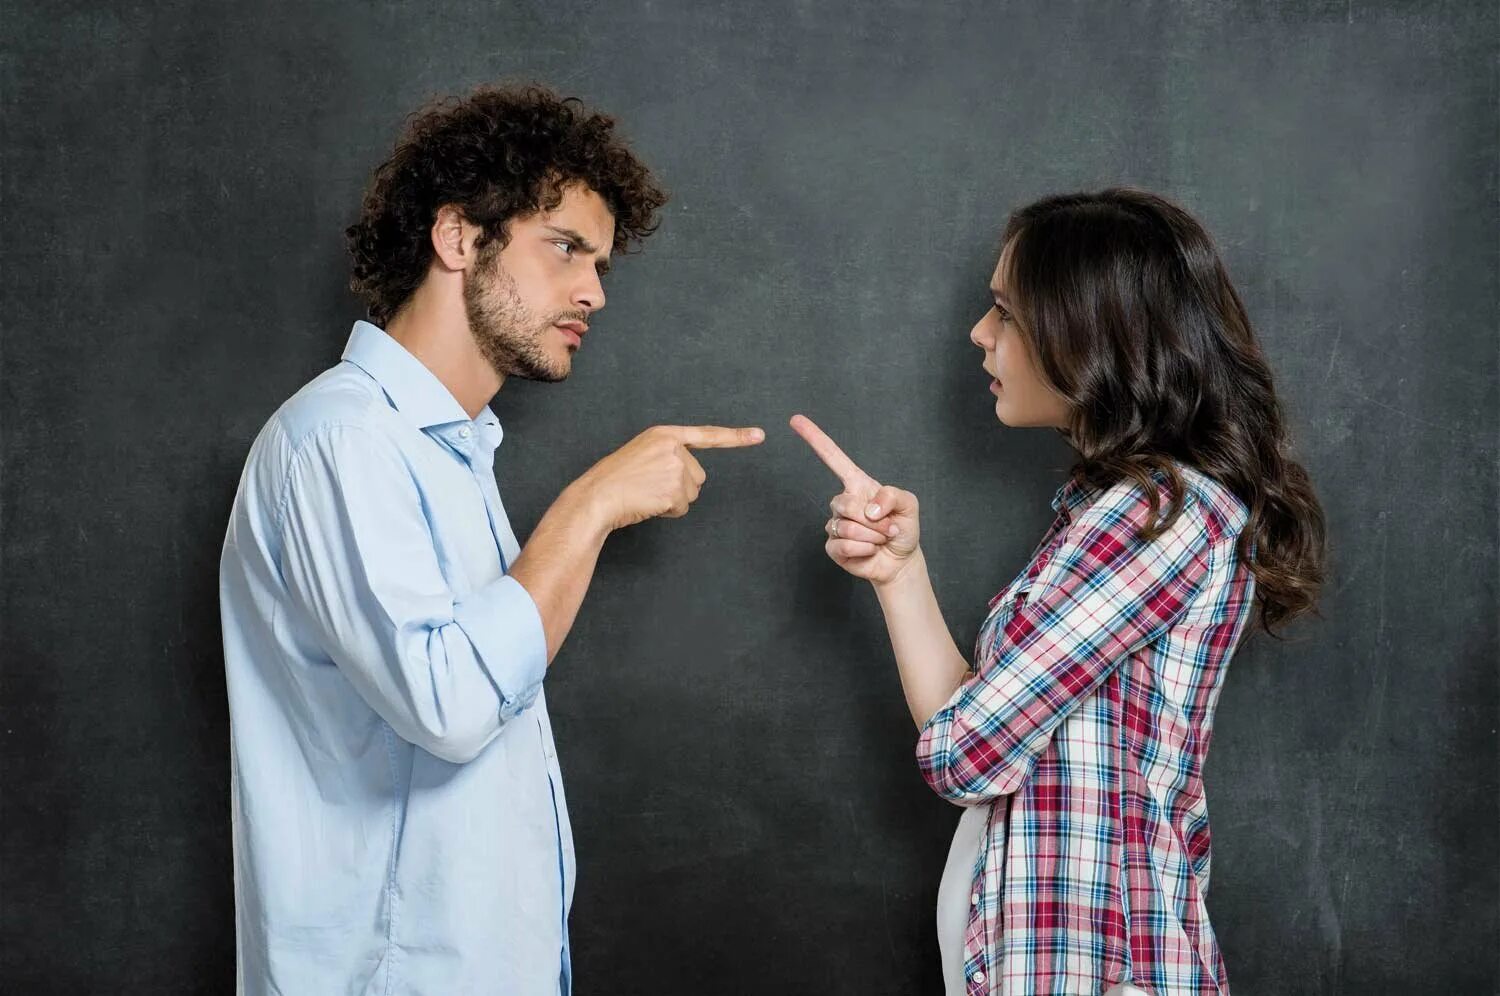 Конфликт. Люди спорят. Мужчина и женщина спорят. Спор между мужчиной и женщиной. Класс ссорится